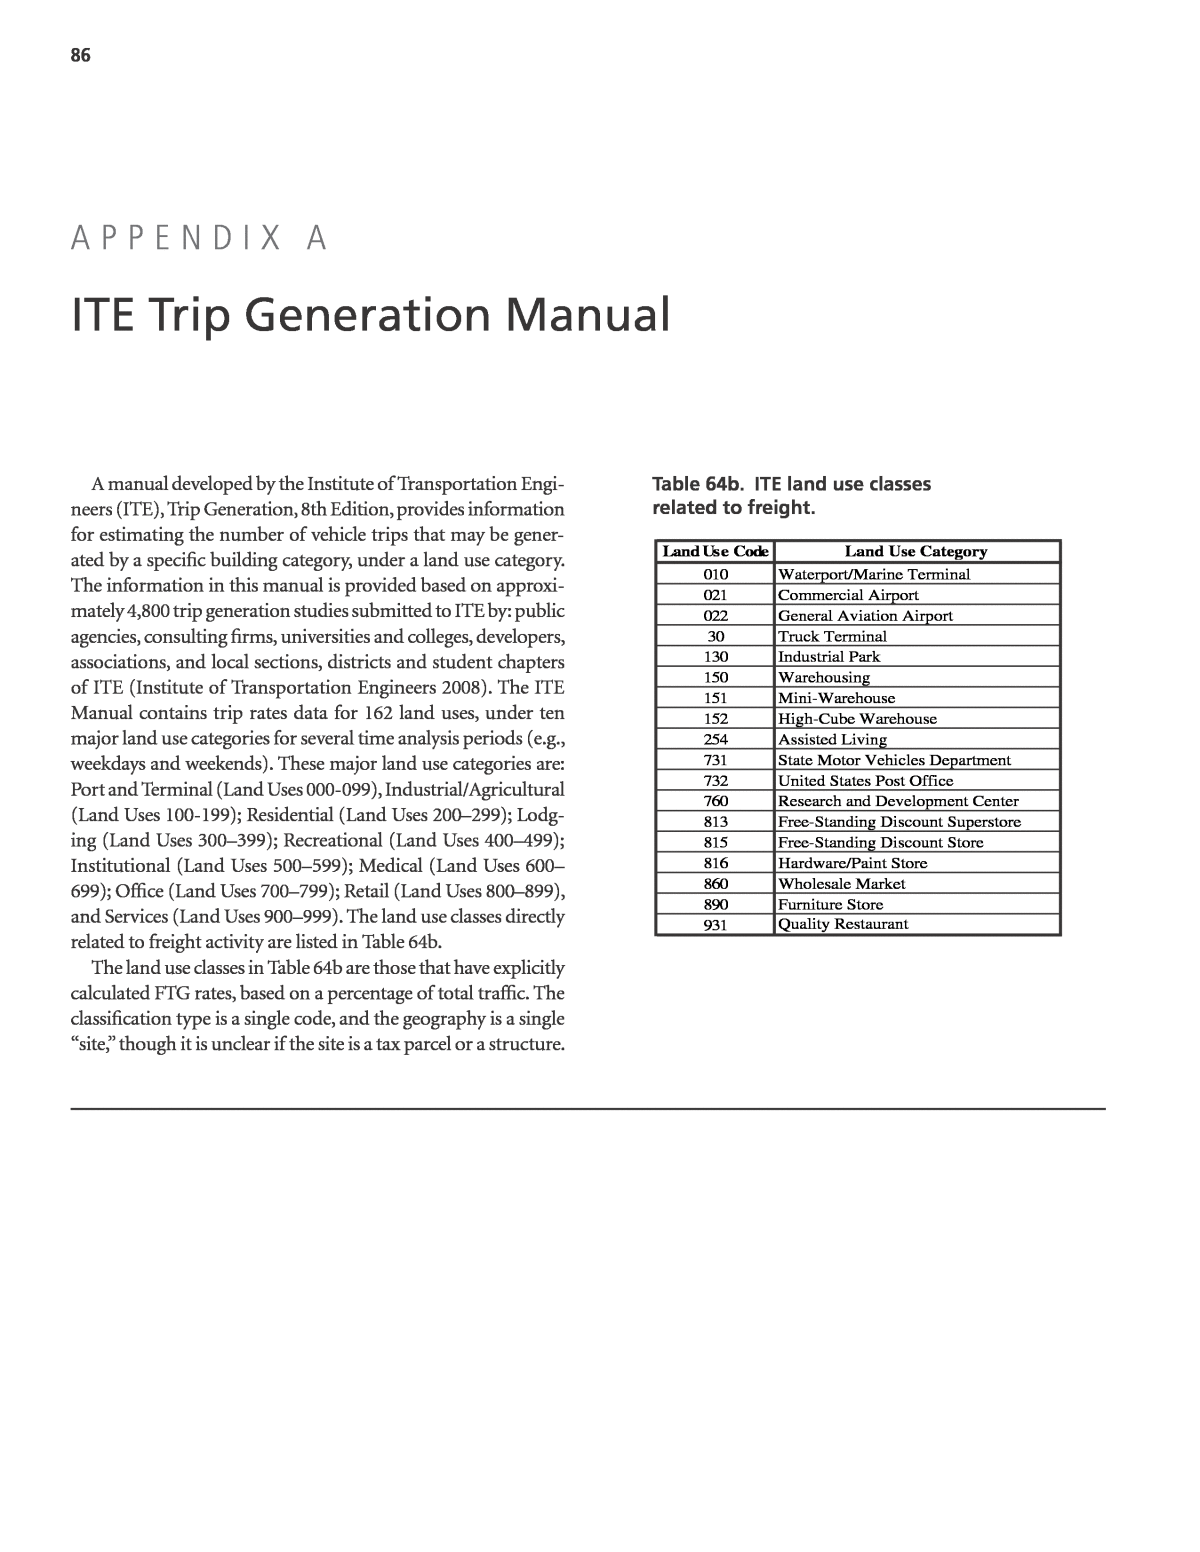 ite trip generation manual 9th edition